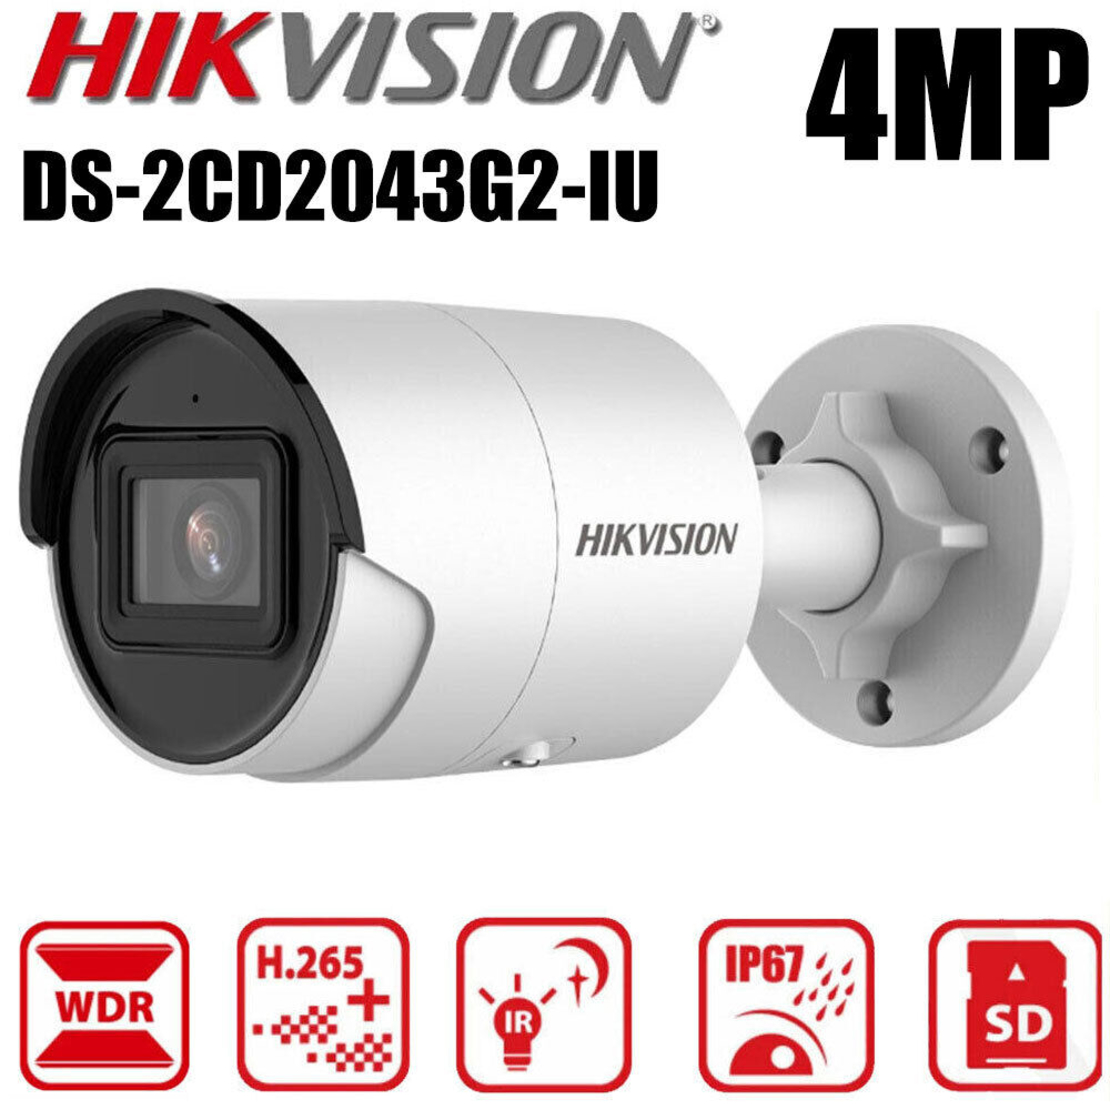 DS-2CD2043G2-I - מצלמת IP מיני צינור באיכות 4MP מבית HIKVISION